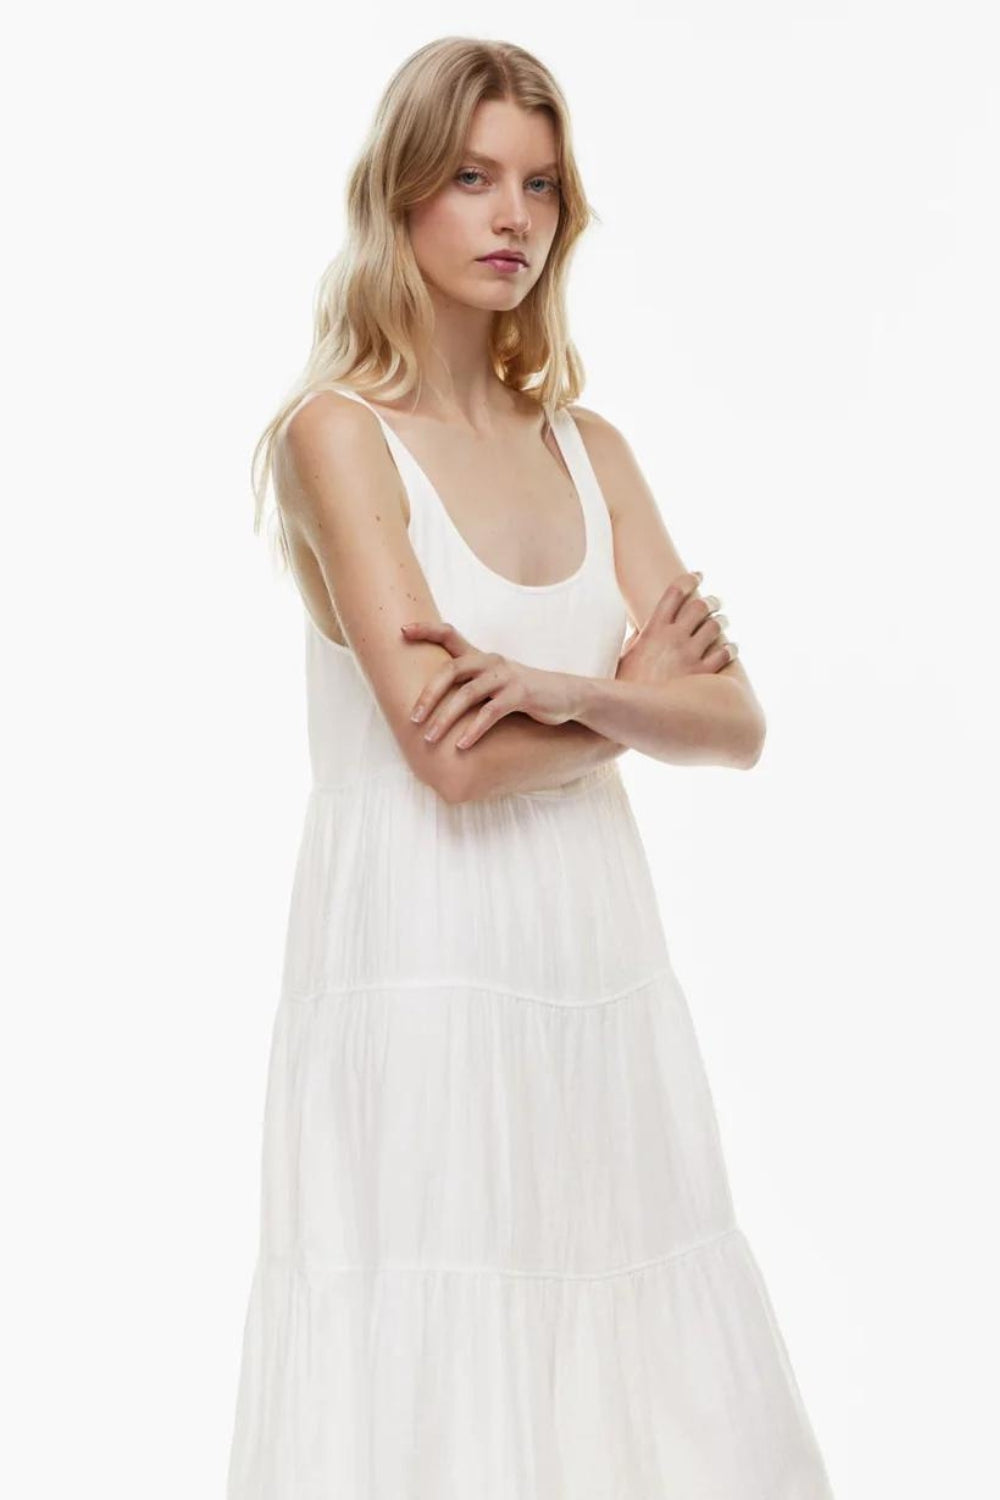 Breezy White Dress